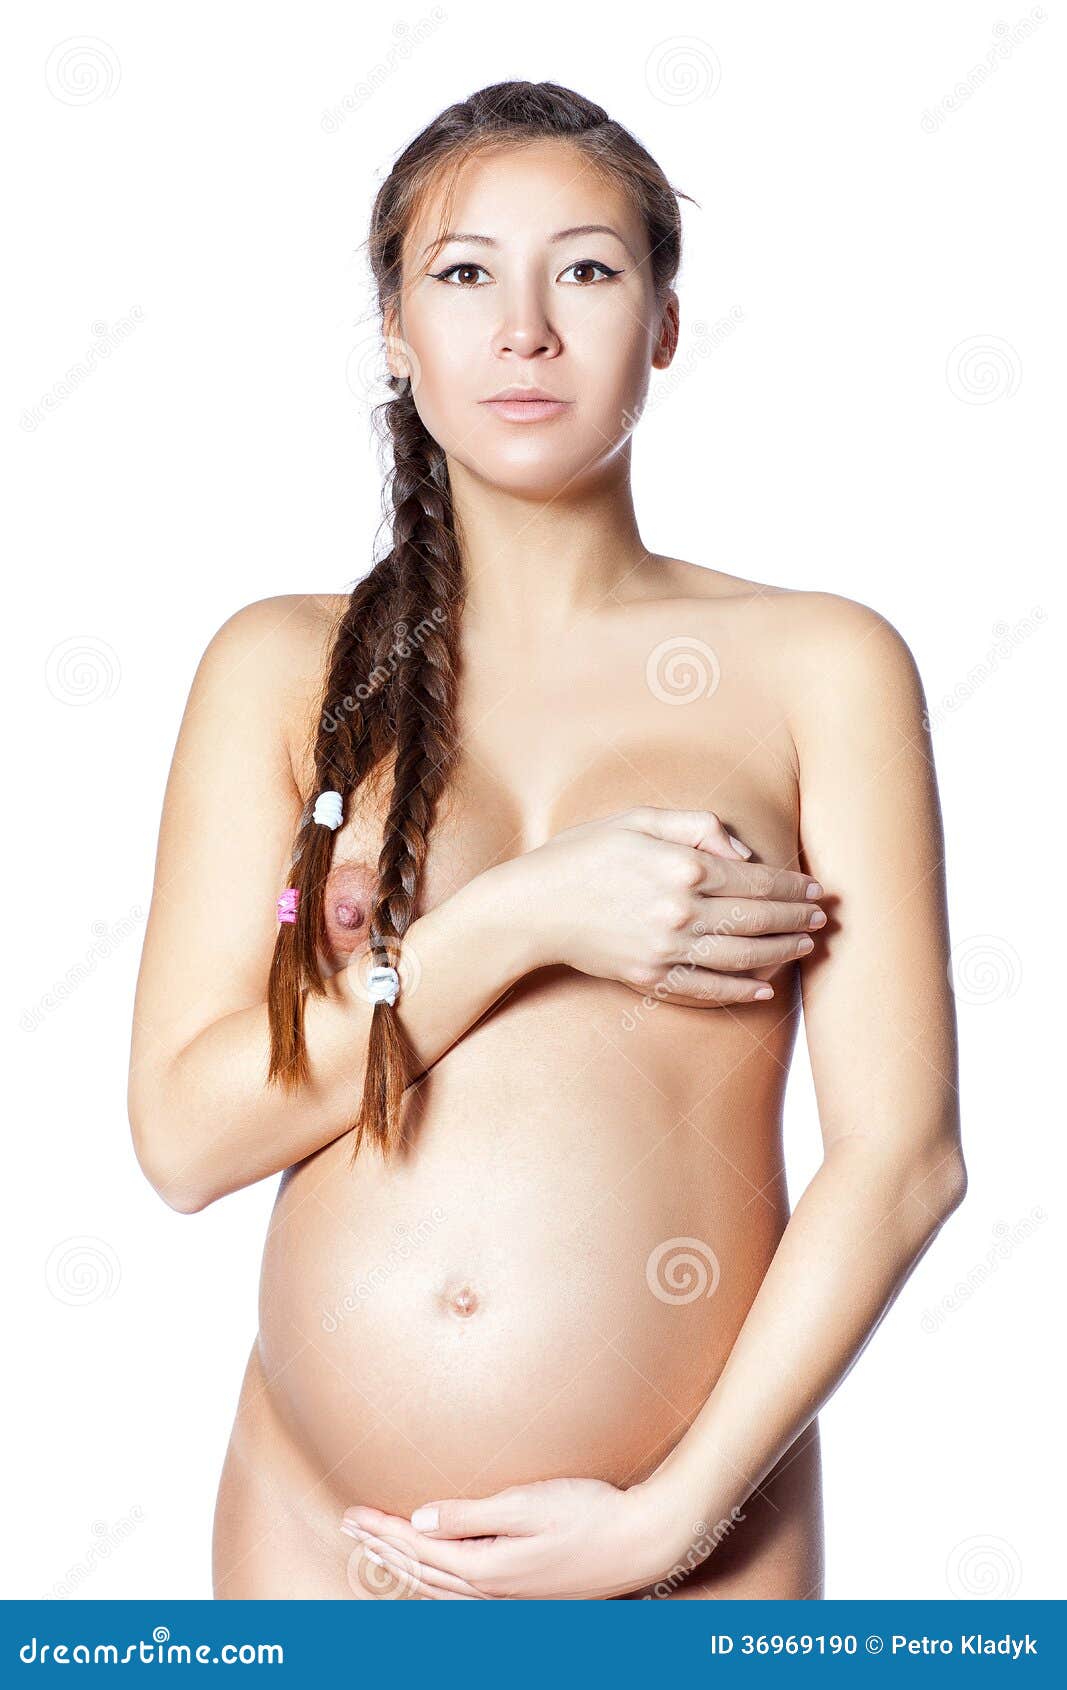 alma cami share pregnant teen nudist photos